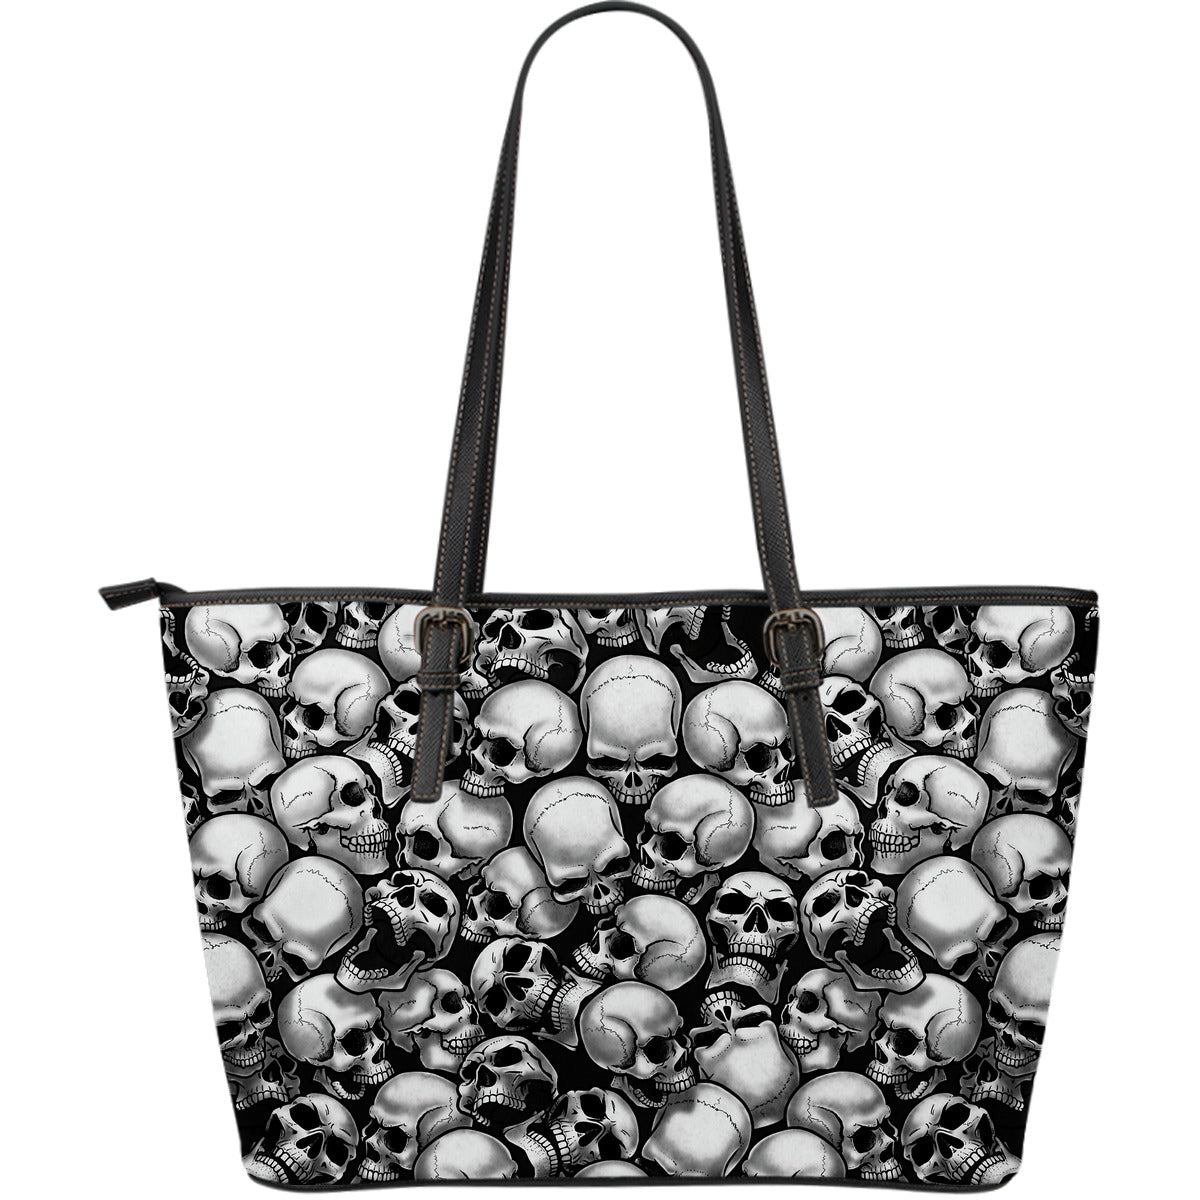 Skull Pile Large Leather Tote Bag - Black & White